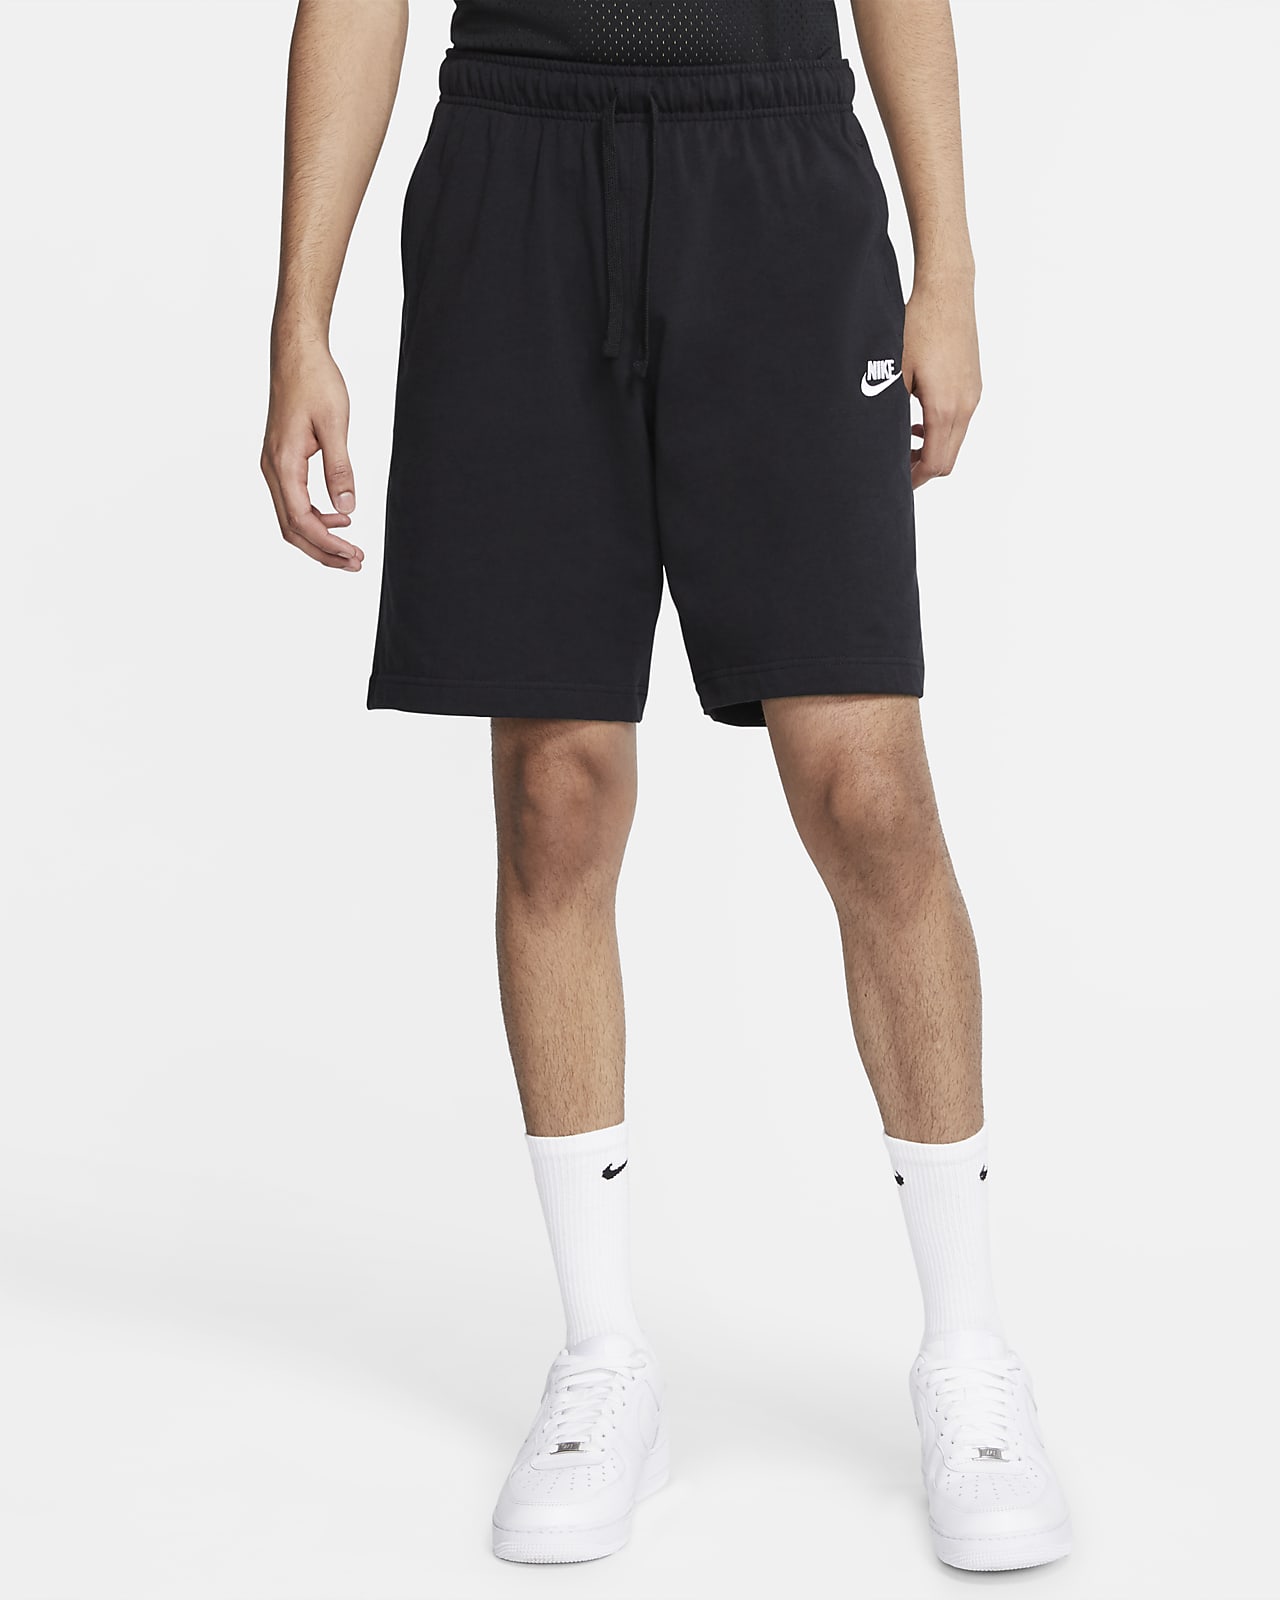 Shorts Nike Sportswear Club för män